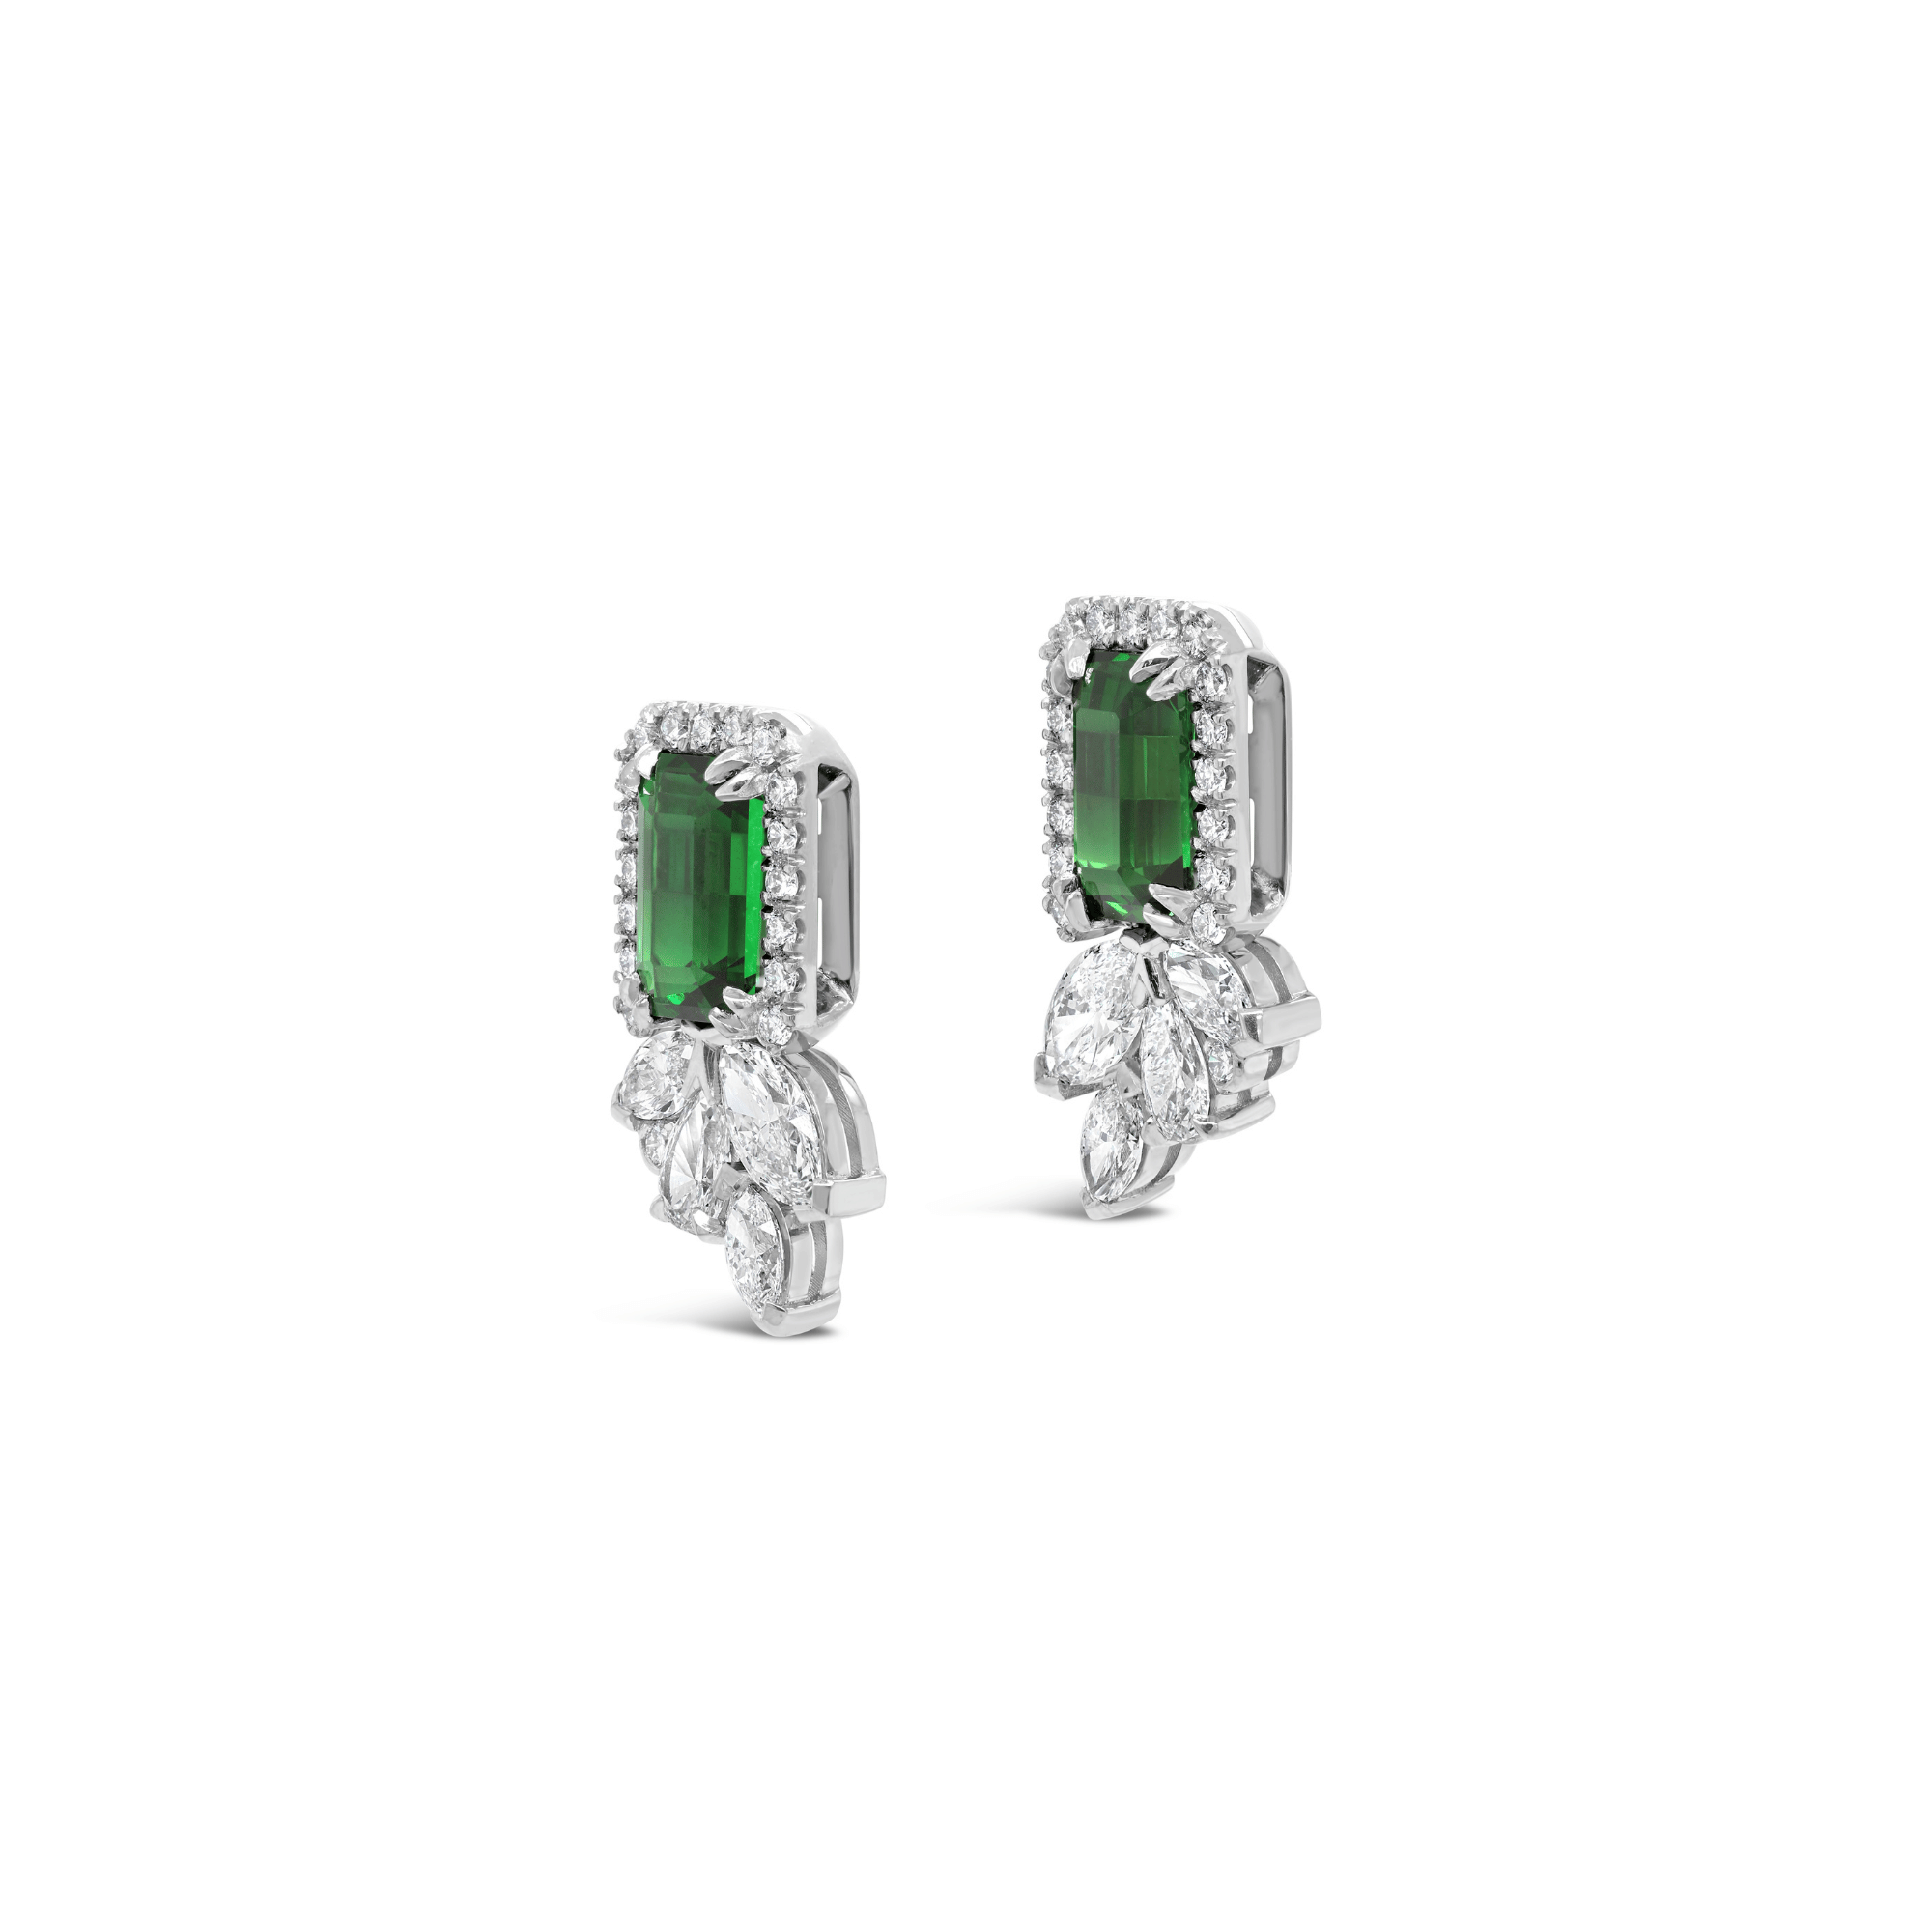 Emerald green tsavorite earrings with diamonds